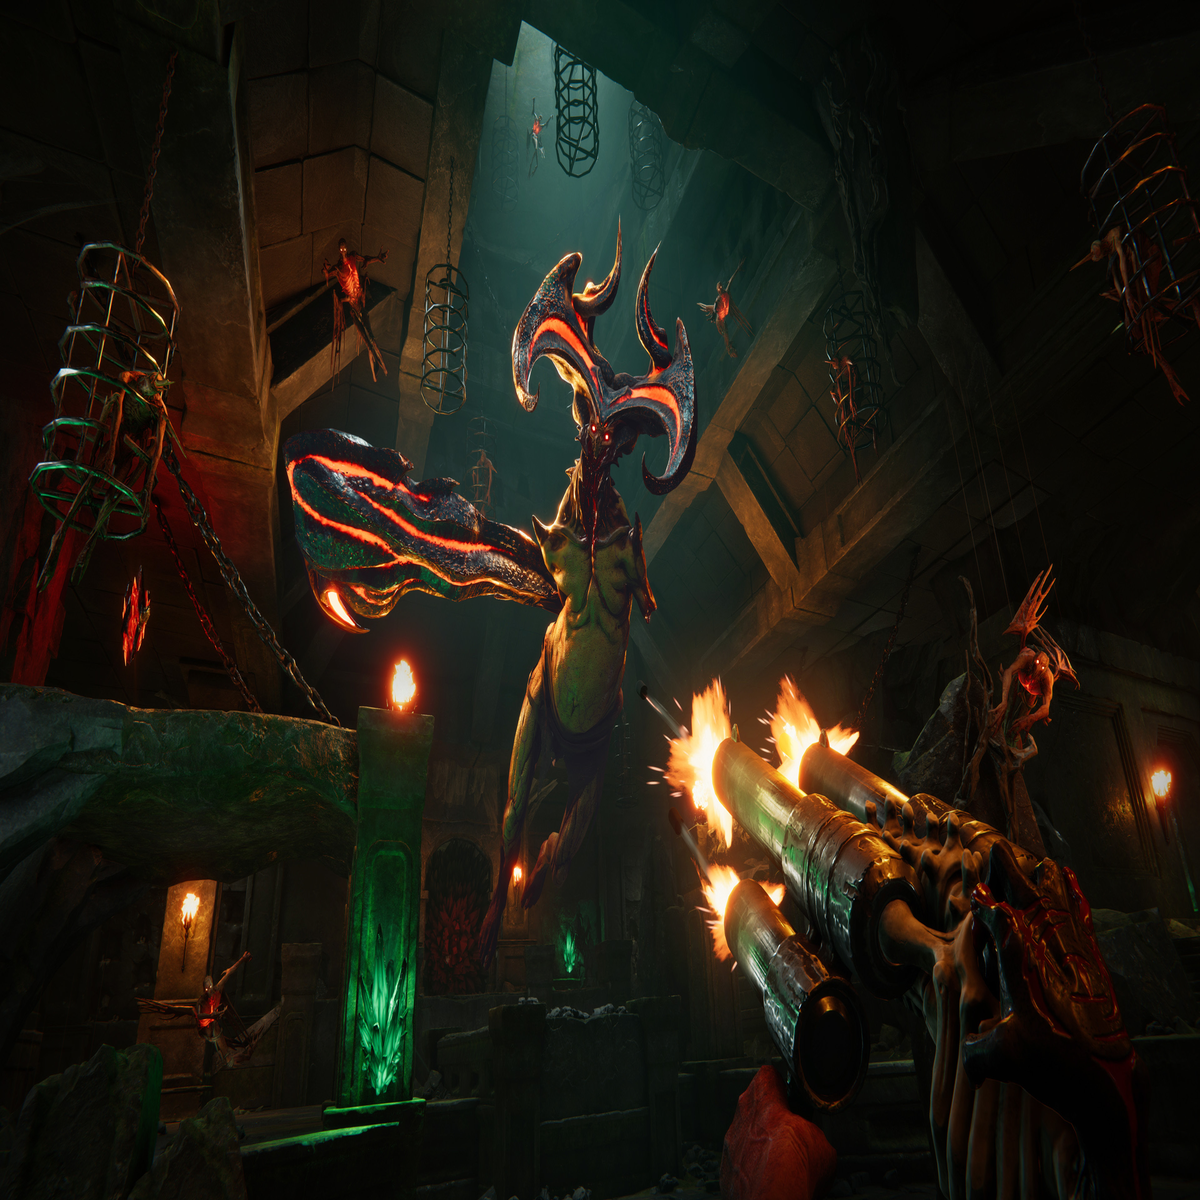 Rhythm shooter Metal: Hellsinger's first DLC Dream of the Beast